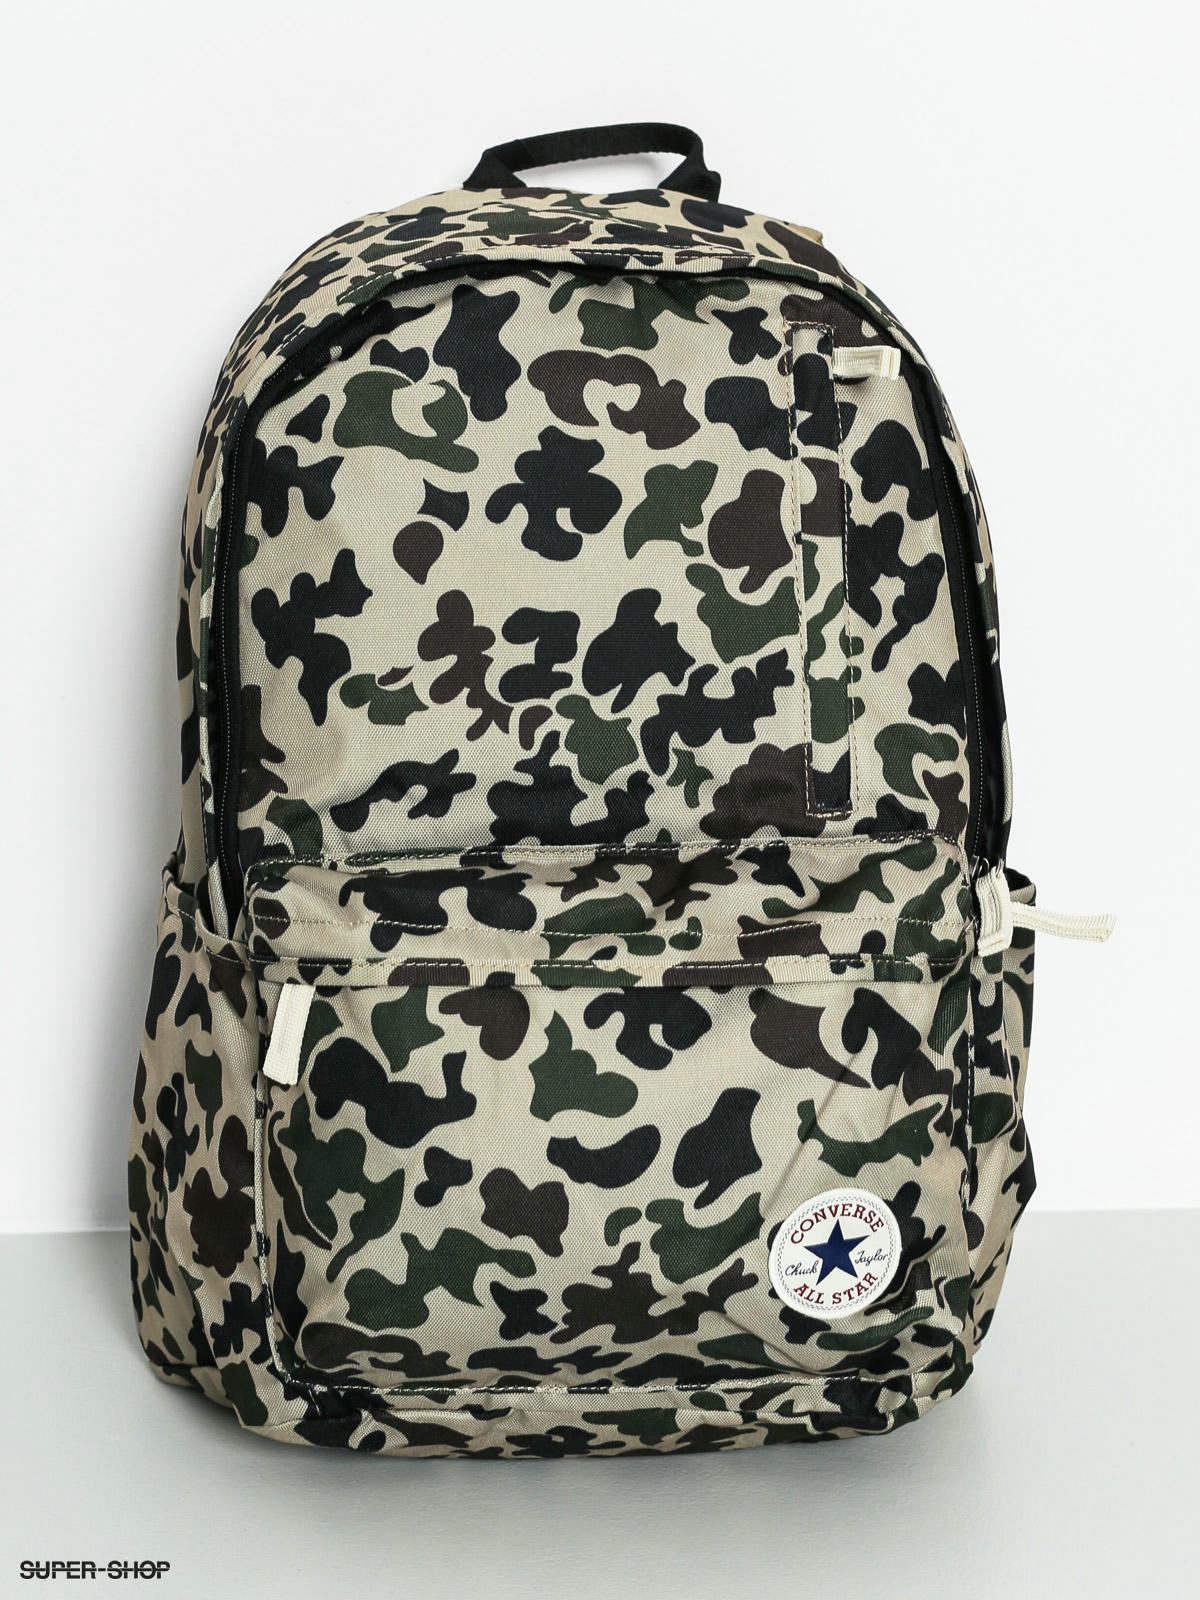 converse backpack original